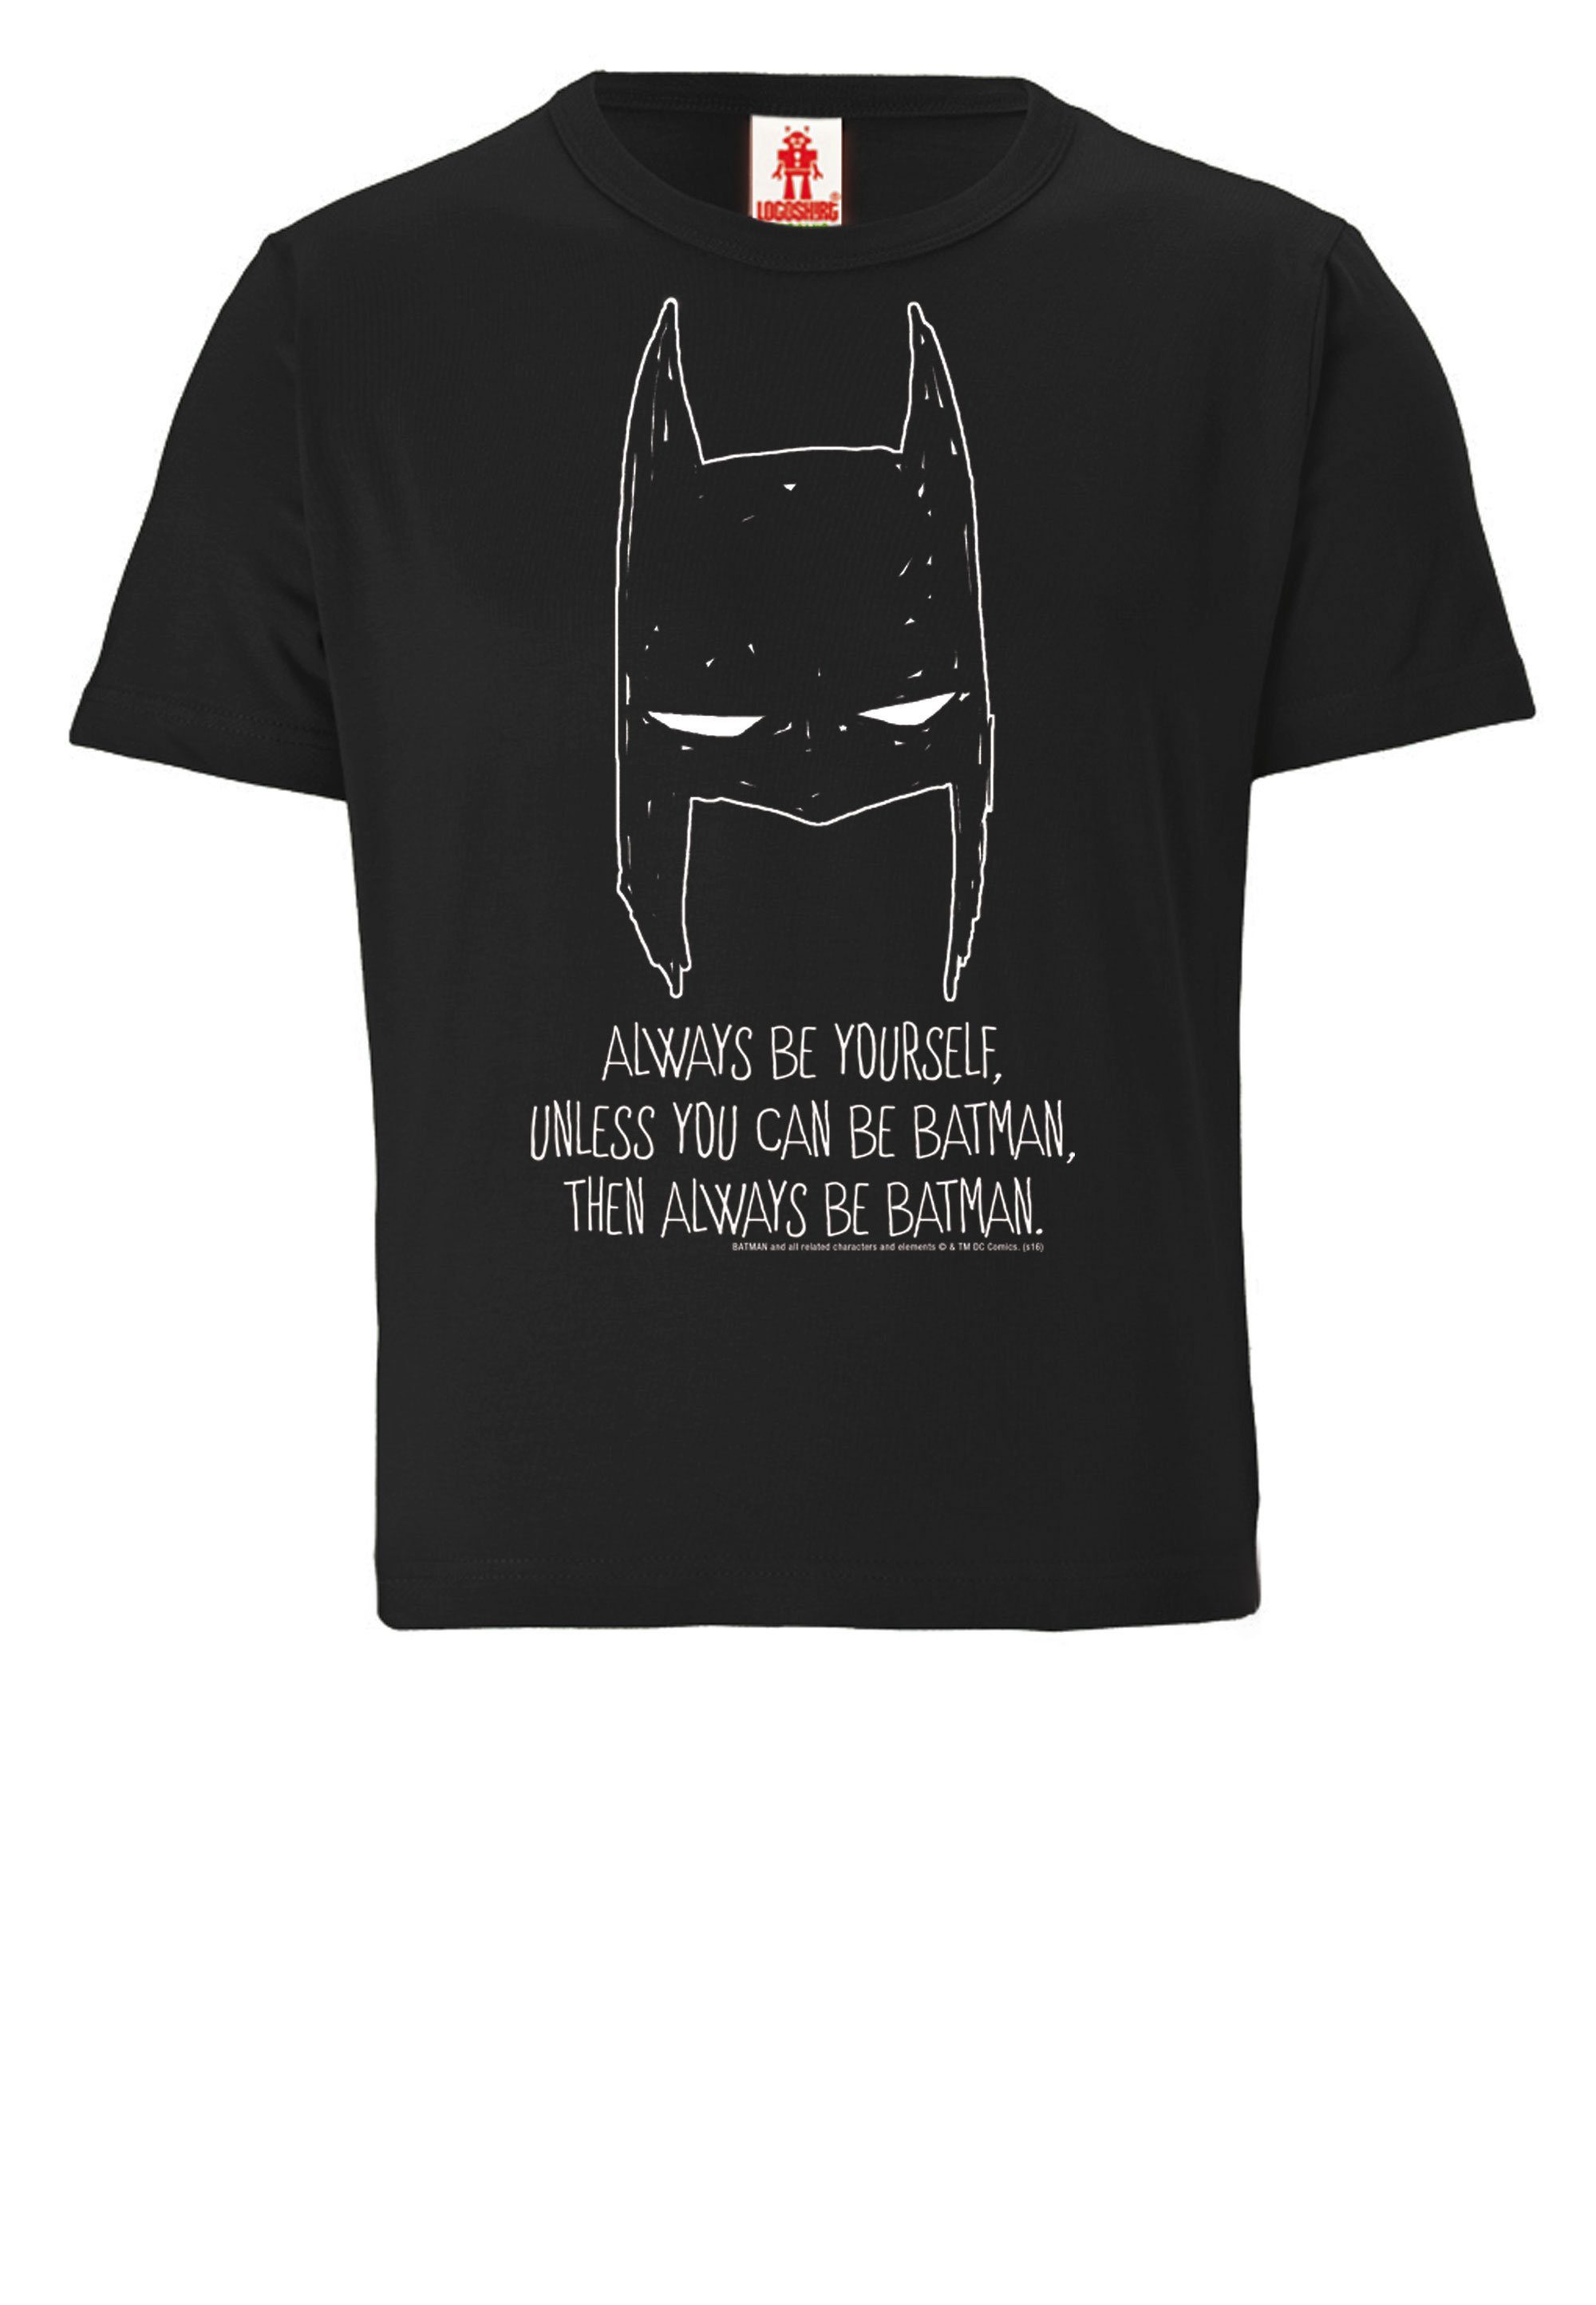 lizenziertem Batman, T-Shirt LOGOSHIRT DC Comics mit - Yourself Be Always Print